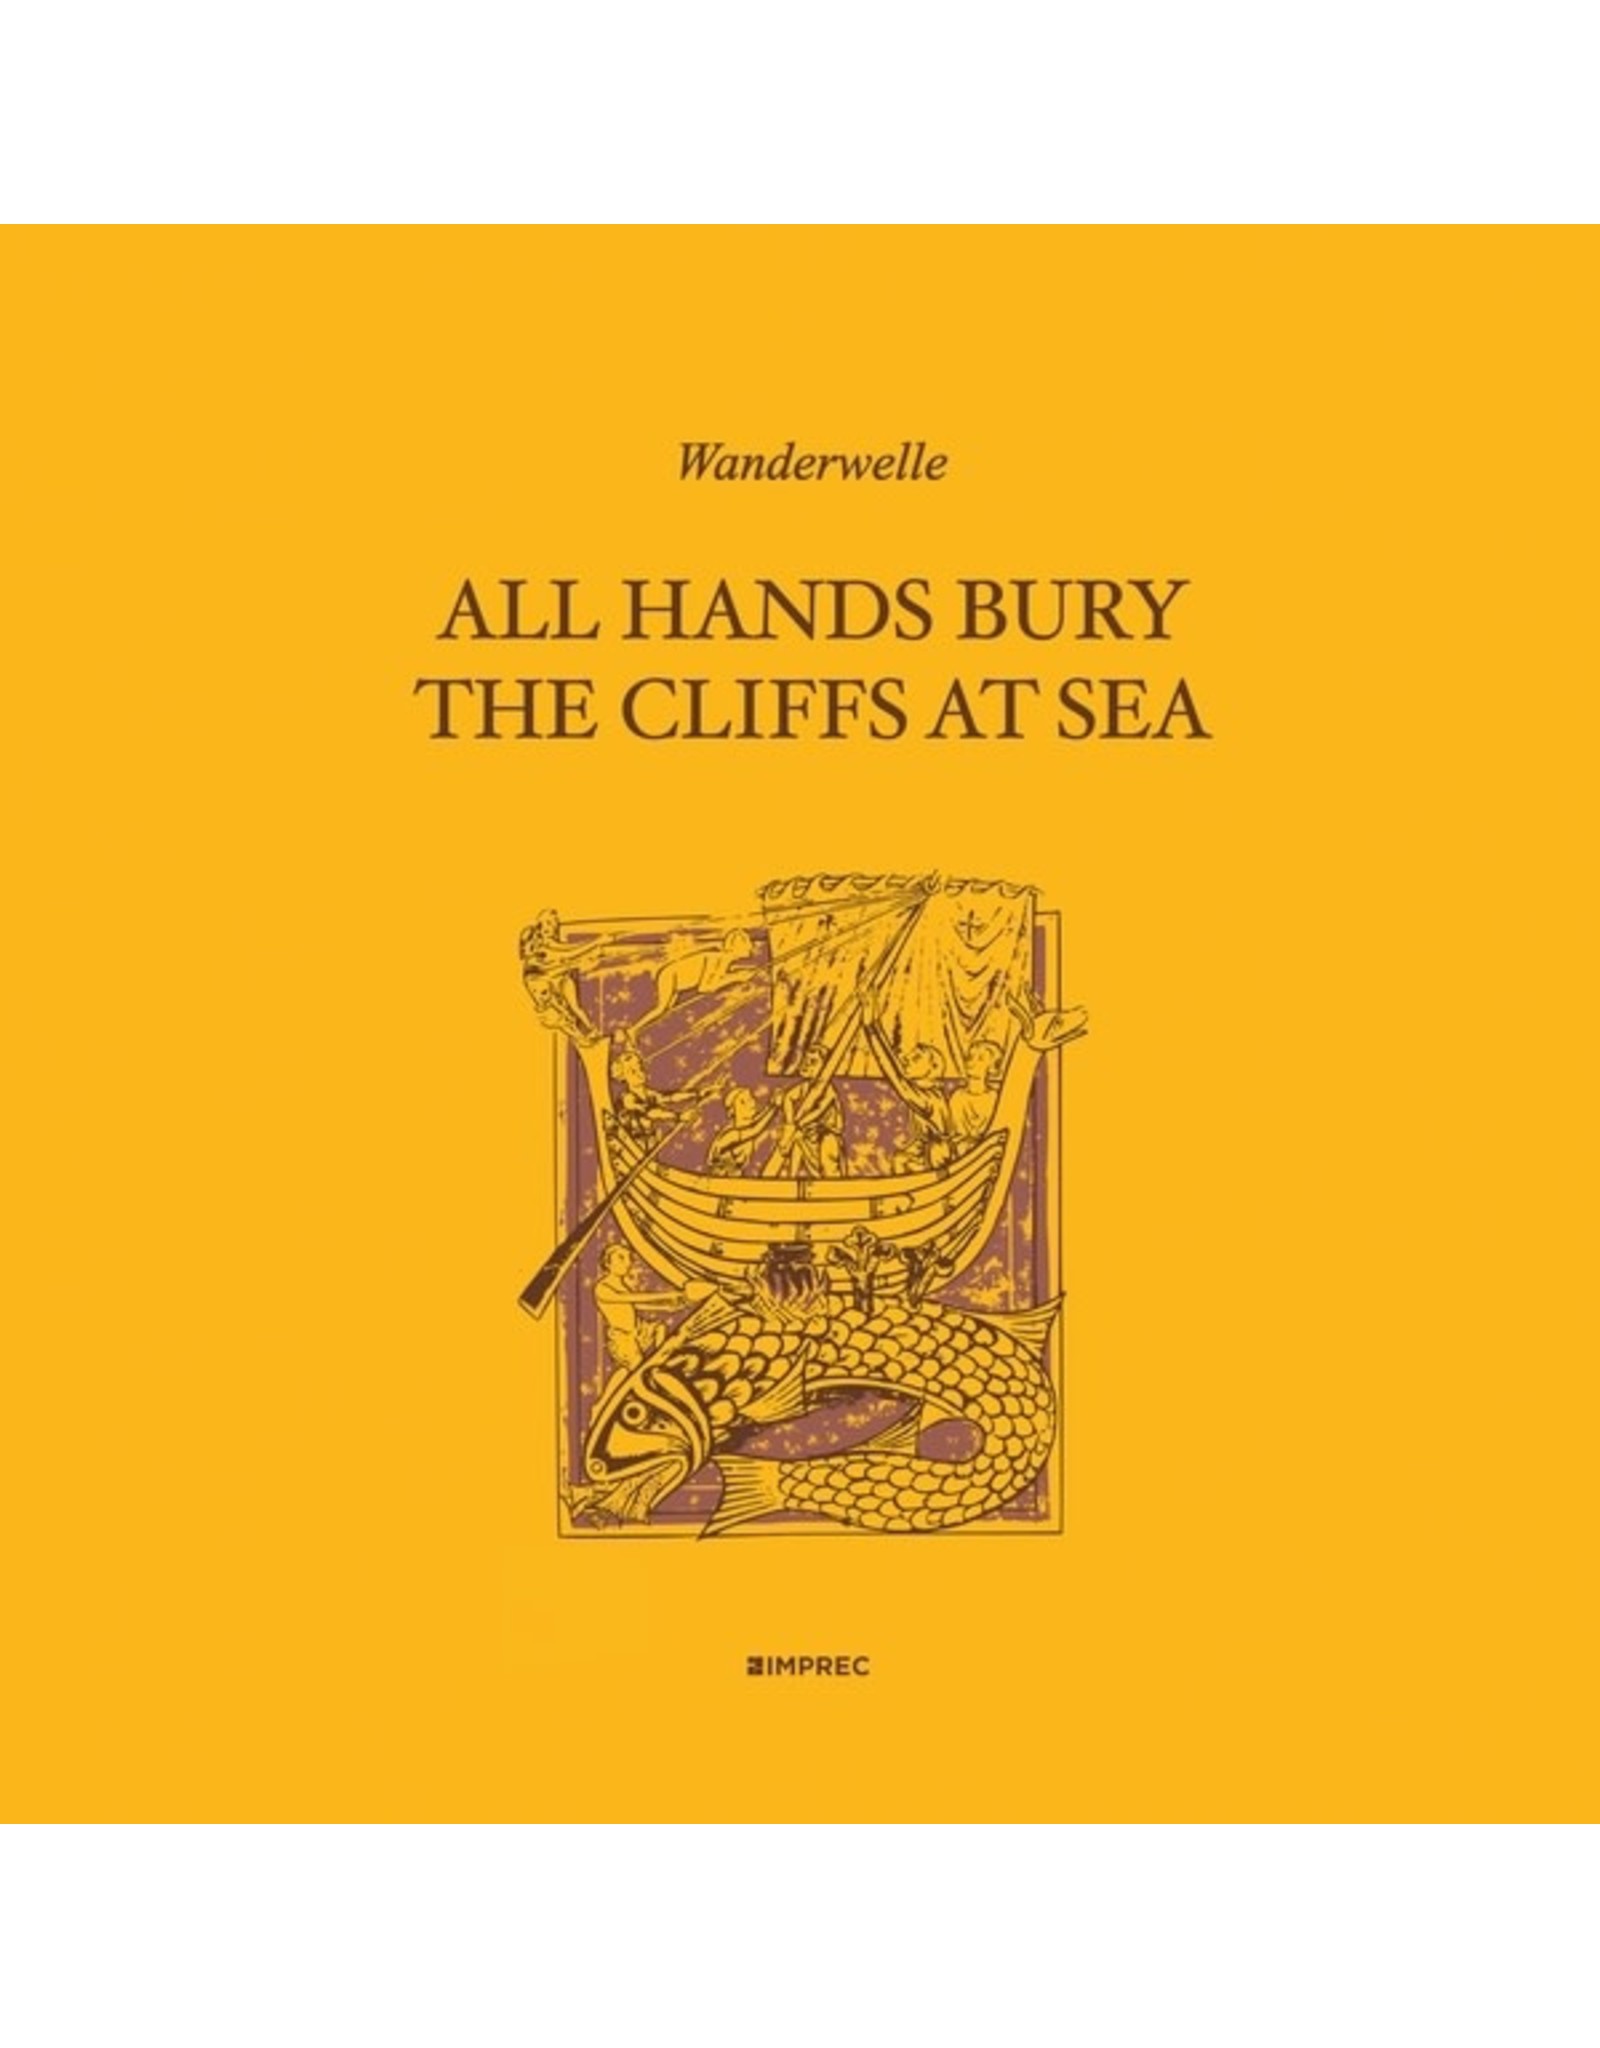 Important Wanderwelle: All Hands Bury LP